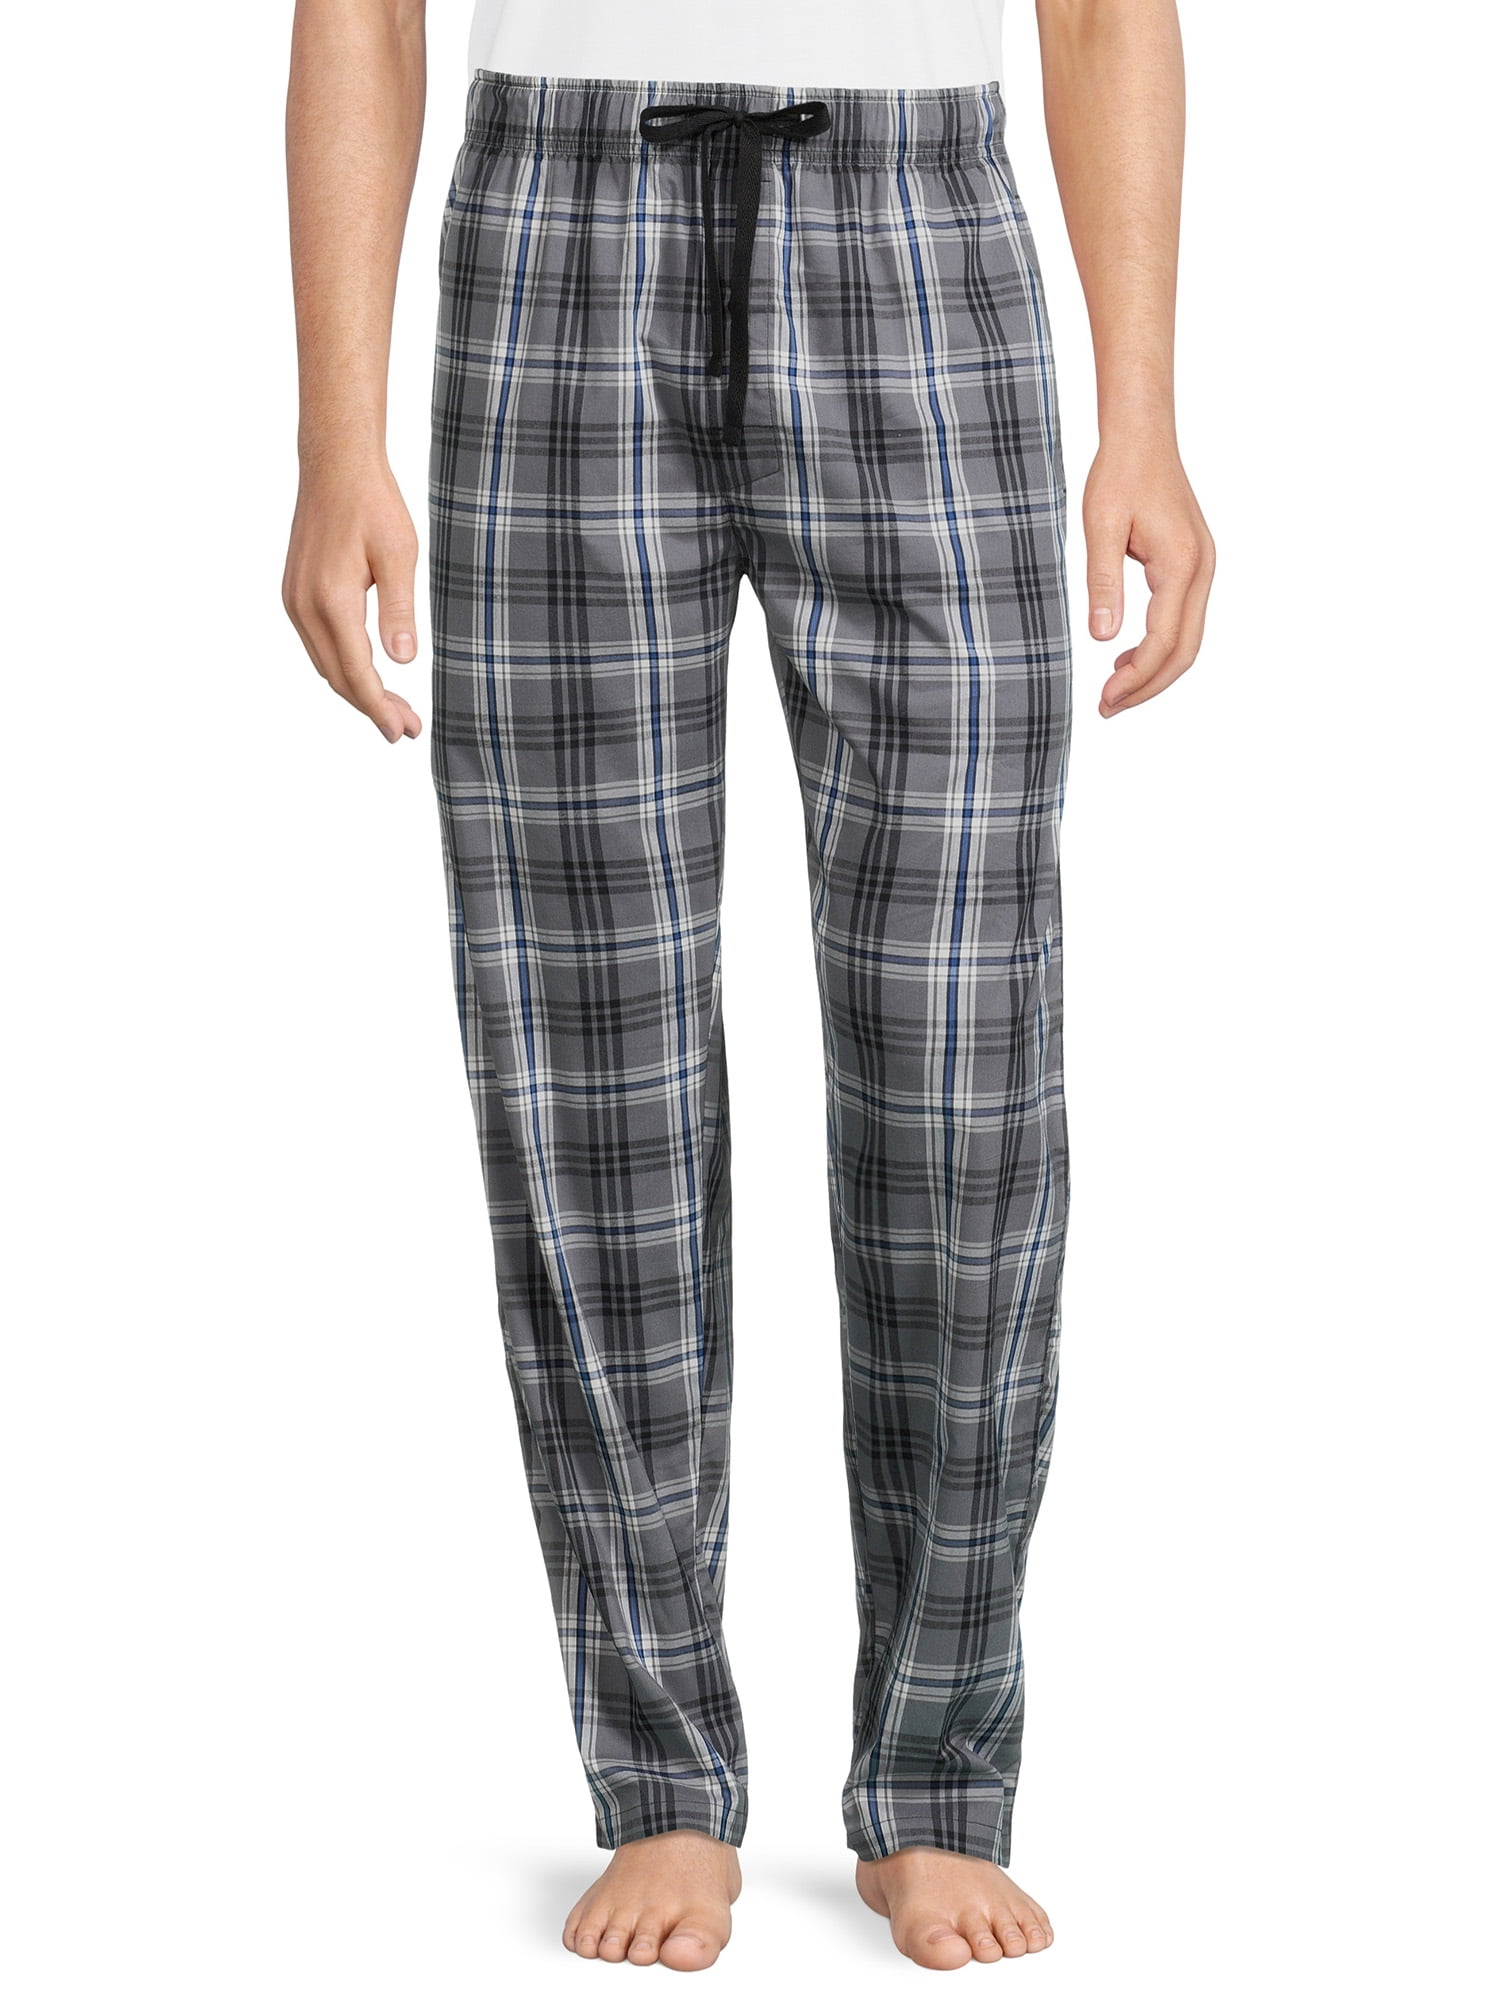 Hanes Men's Woven Sleep Pants, Size S-2XL - Walmart.com